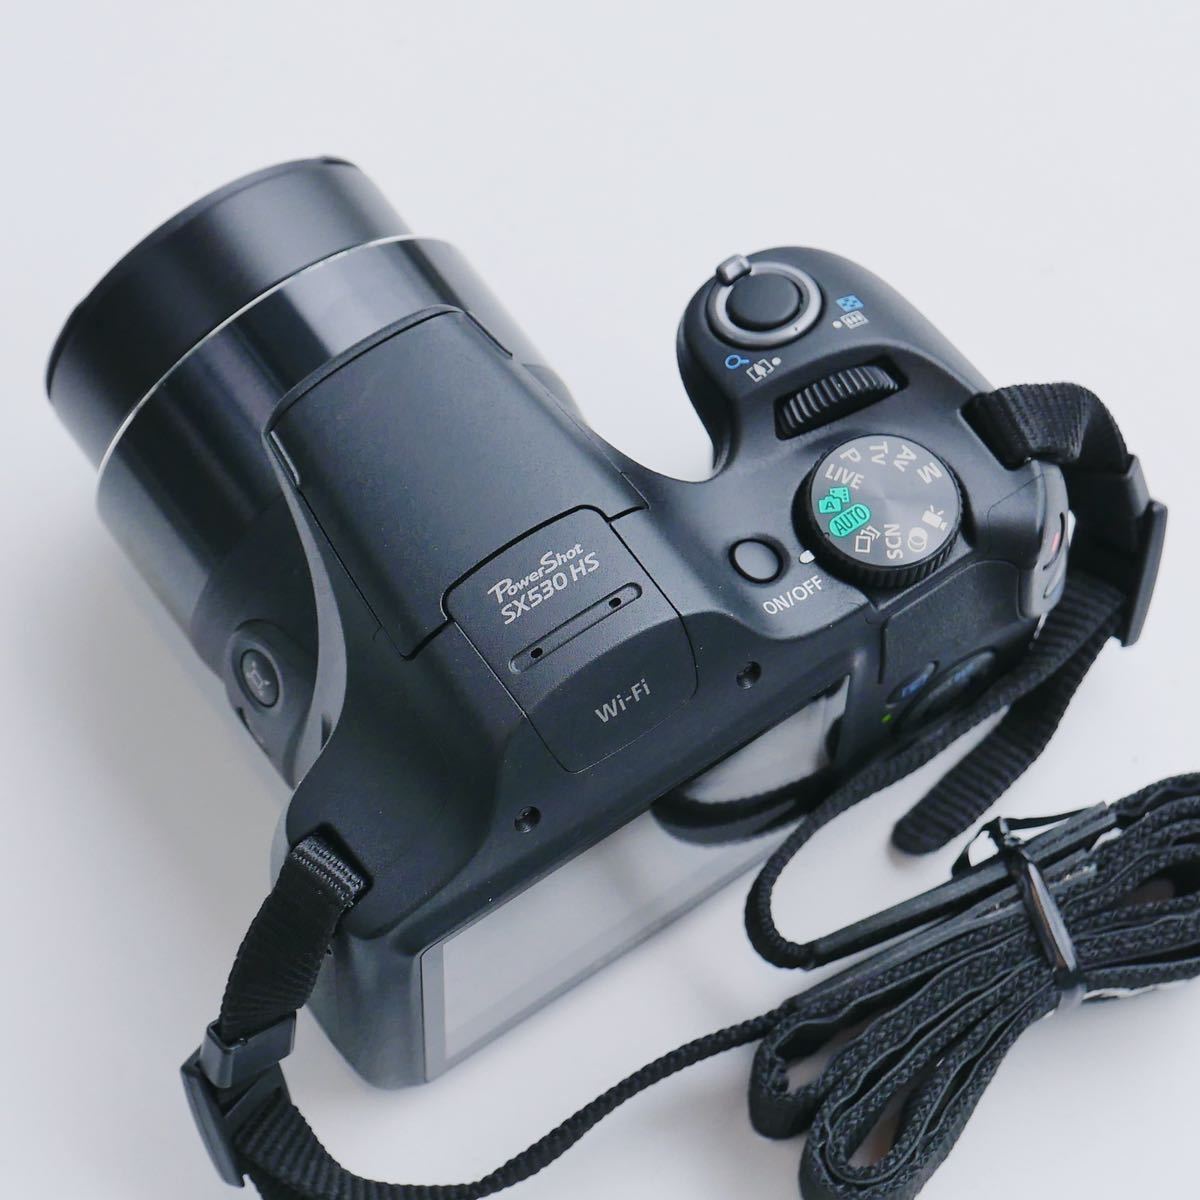 Canon キャノン Powershot SX530HS デジタル カメラ 光学50倍ズーム 